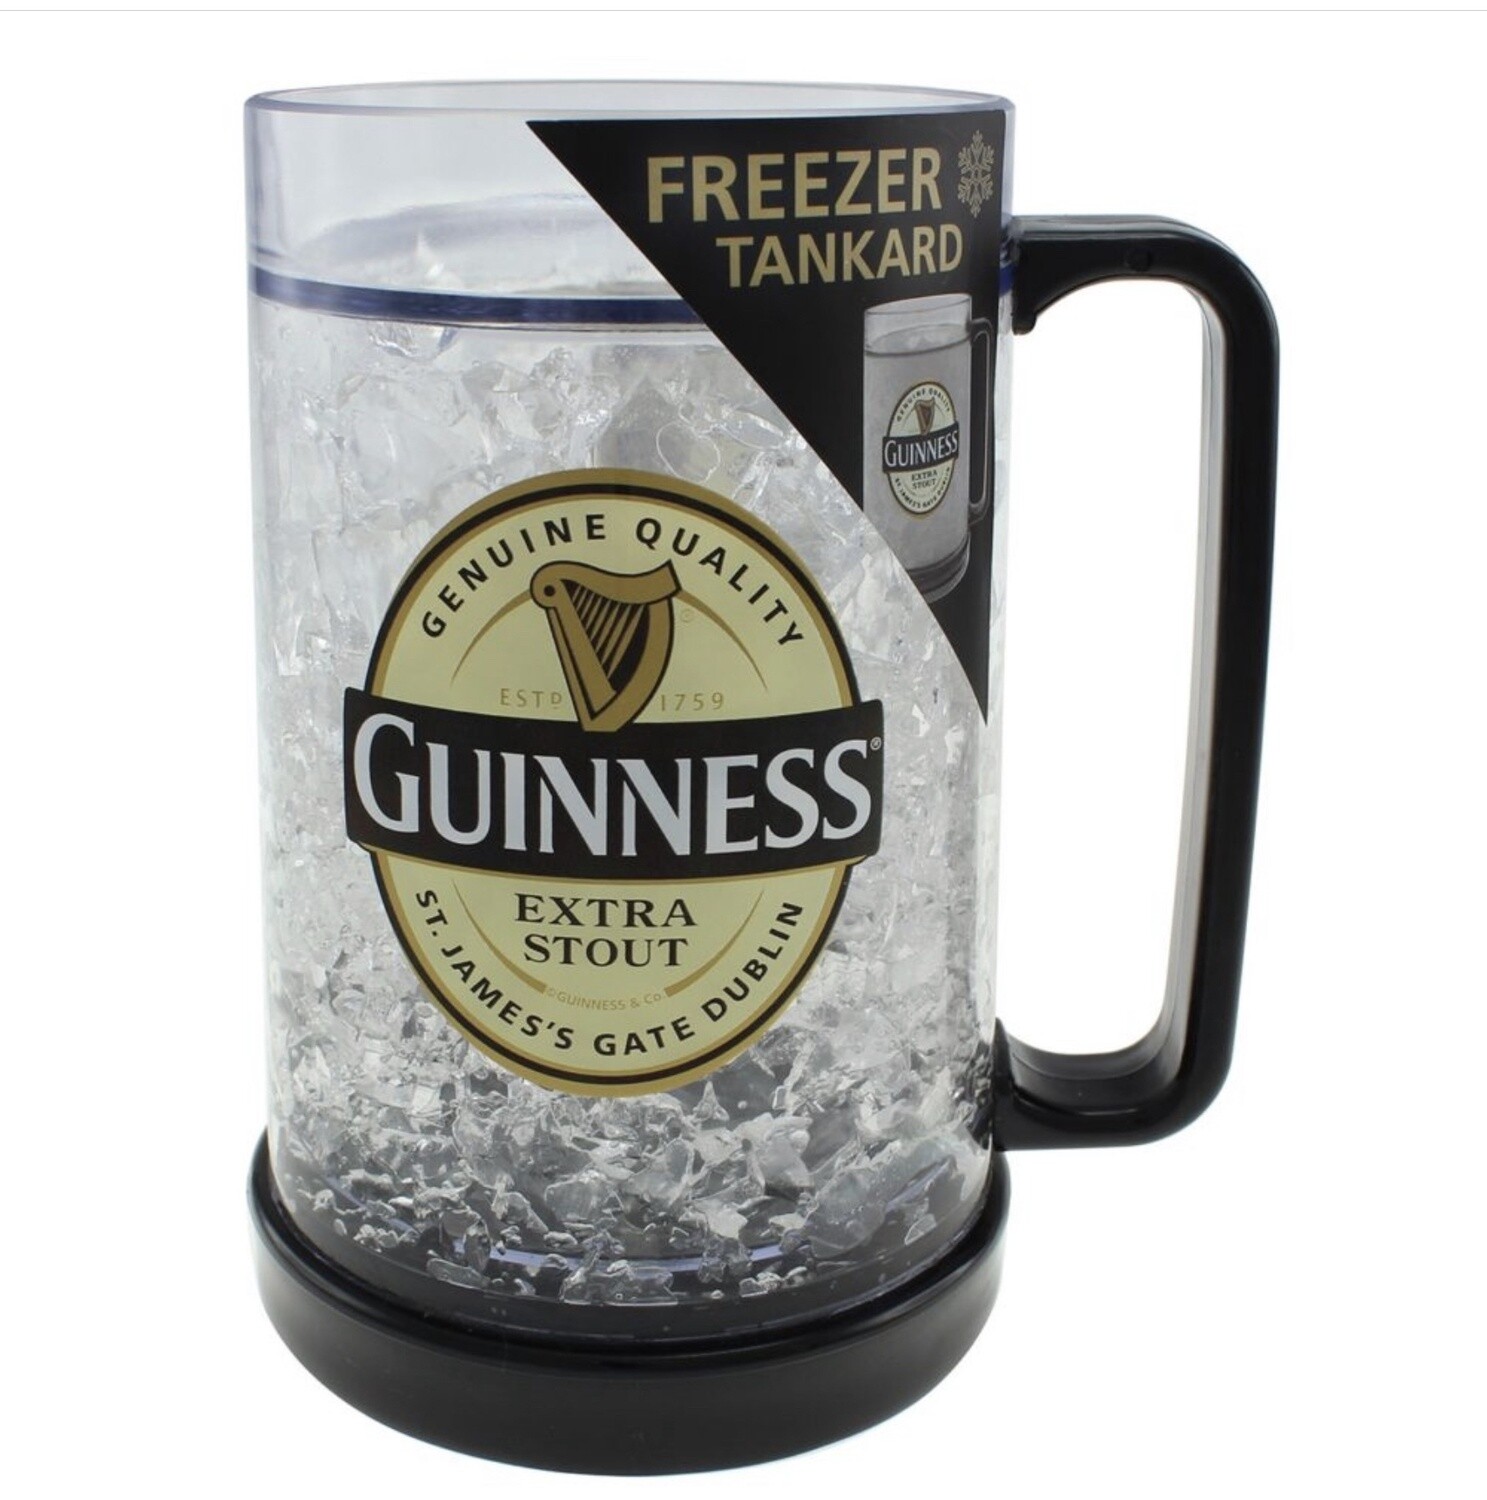 Guinness -  Freezer Tankard